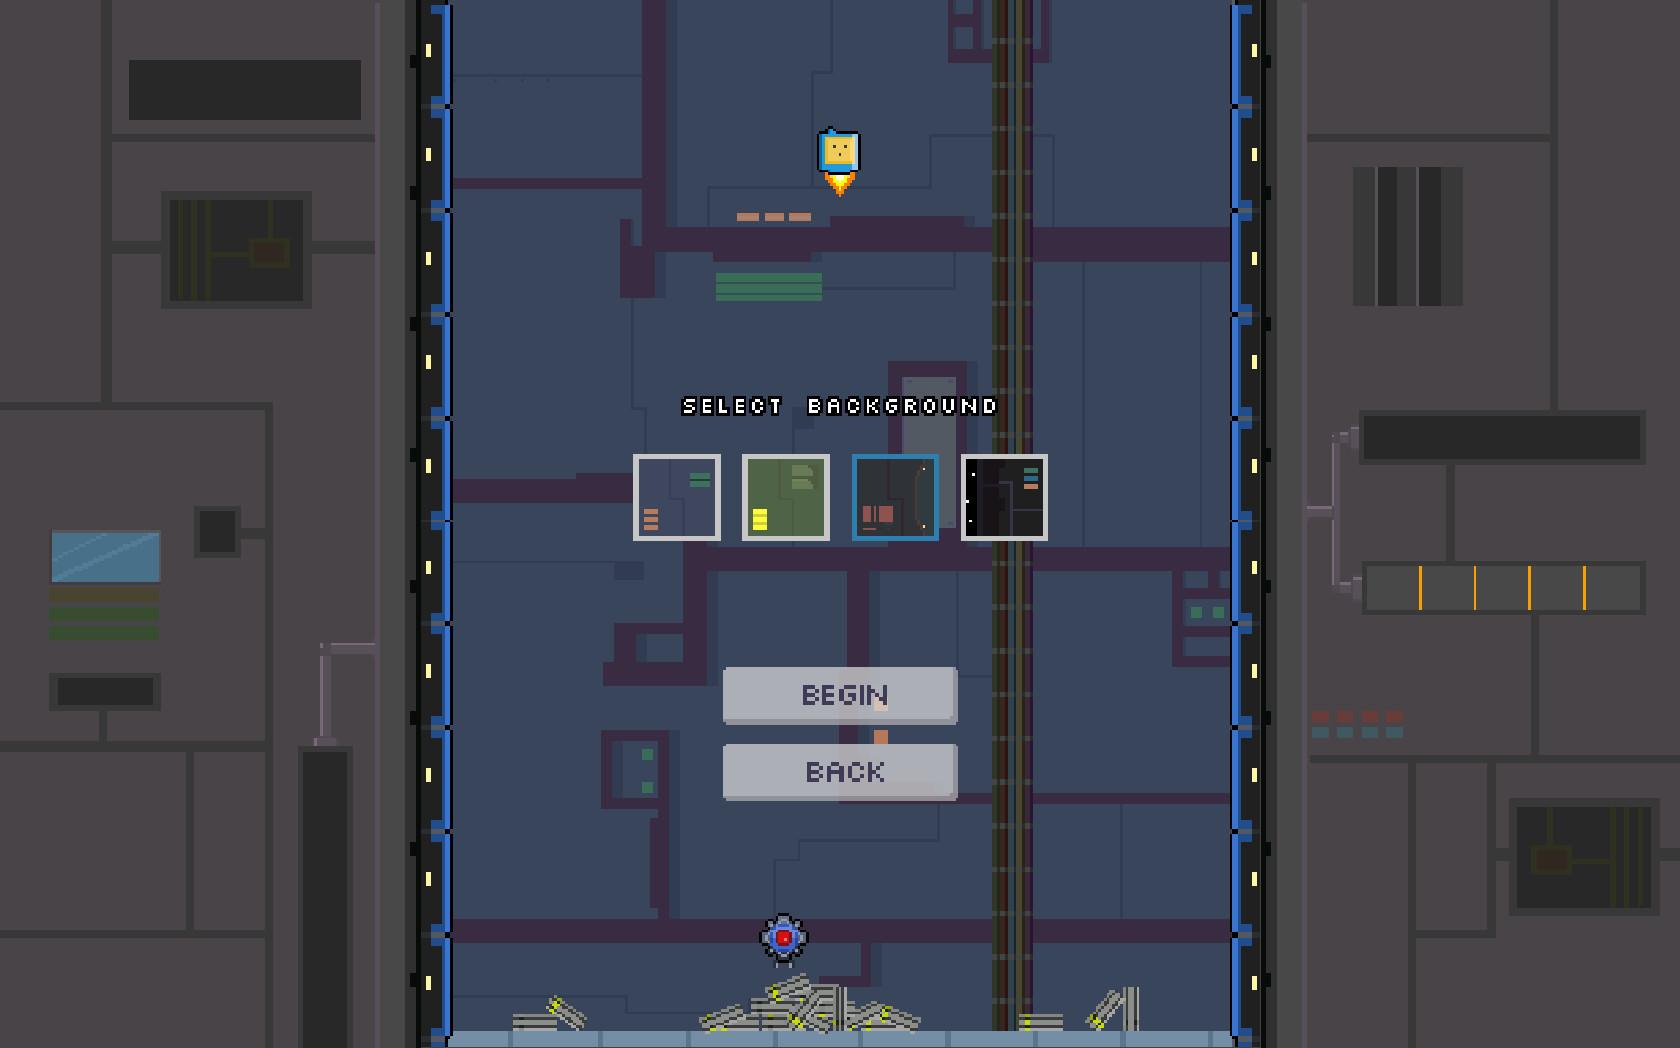 Screenshot №19 from game Madrobot X